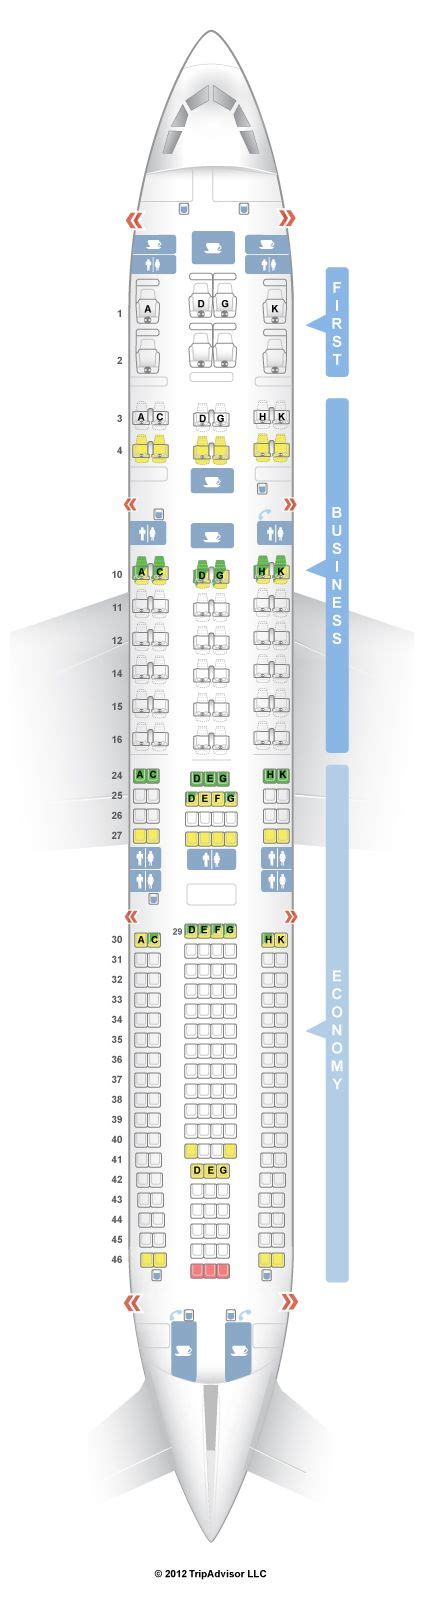 Seatguru Seat Map Lufthansa Airbus A330 300 333 V2 Seatguru Map